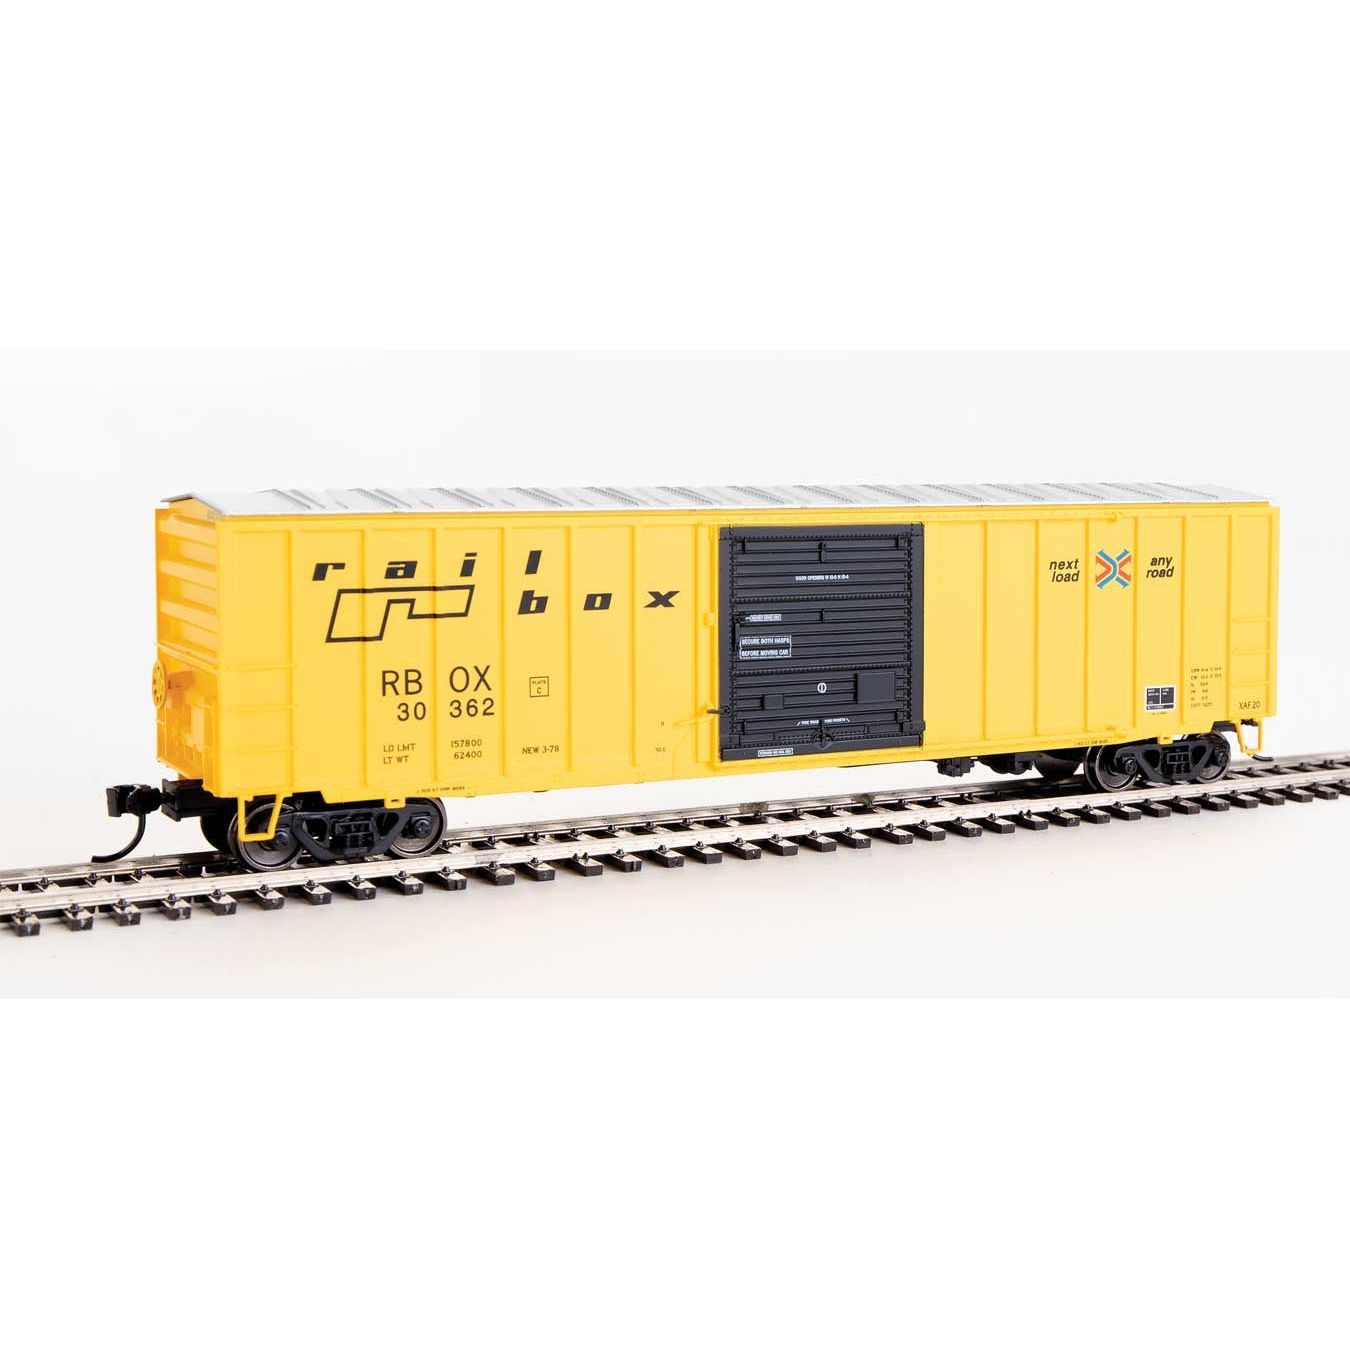 50' ACF Exterior Post Boxcar - Ready to Run -- Railbox #30362 (yellow, Black Door; Small Logo, Slogan) (HO) #1866 by Walthers